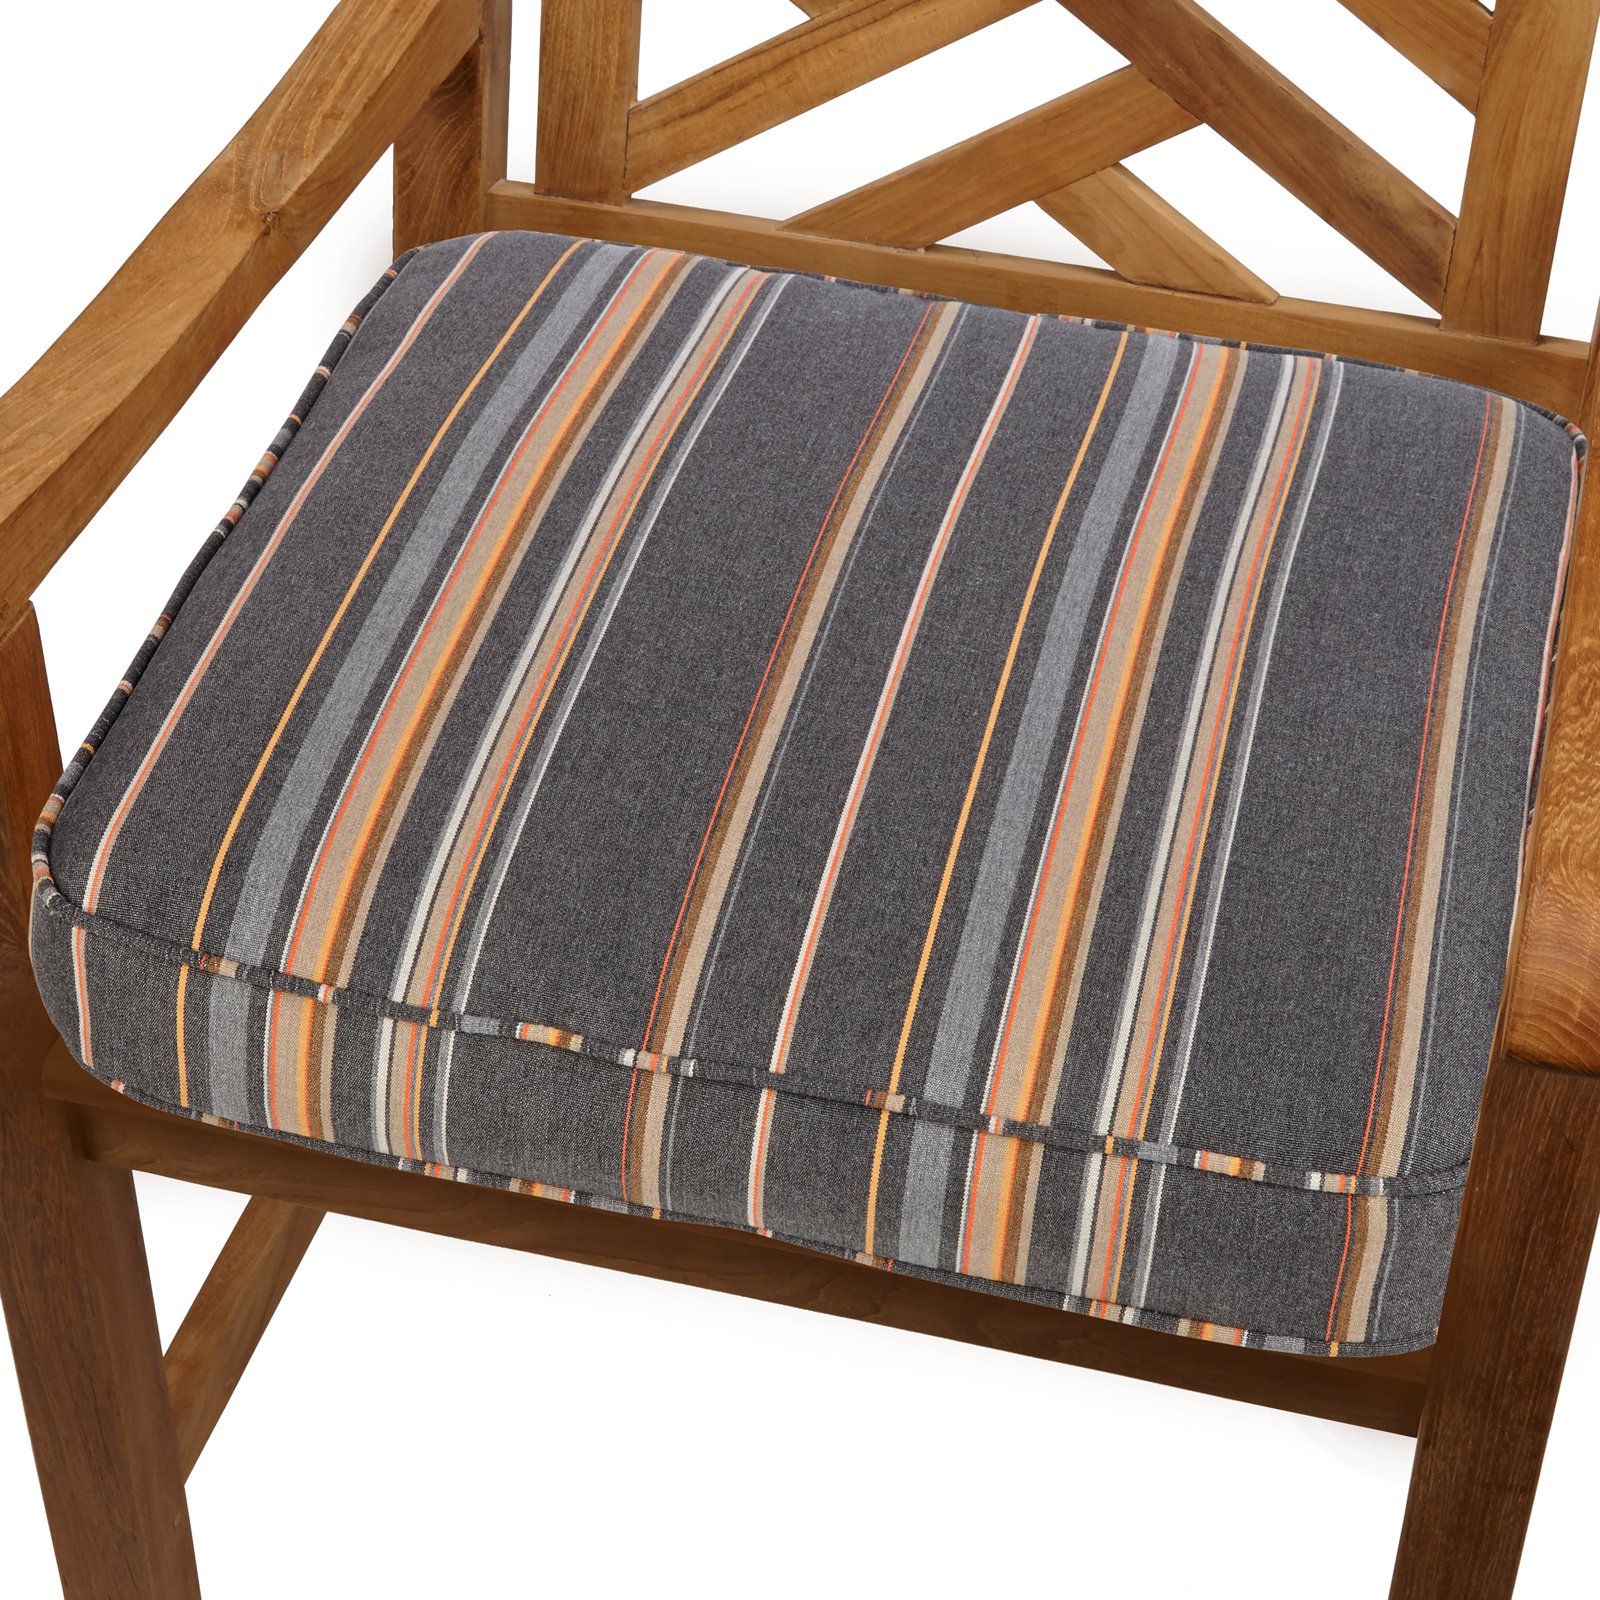 Mozaic Company 22.5 x 22.5 in. Sunbrella Striped Outdoor Square Deep Seat Patio Chair Cushion Berenson Tuxedo Stripe